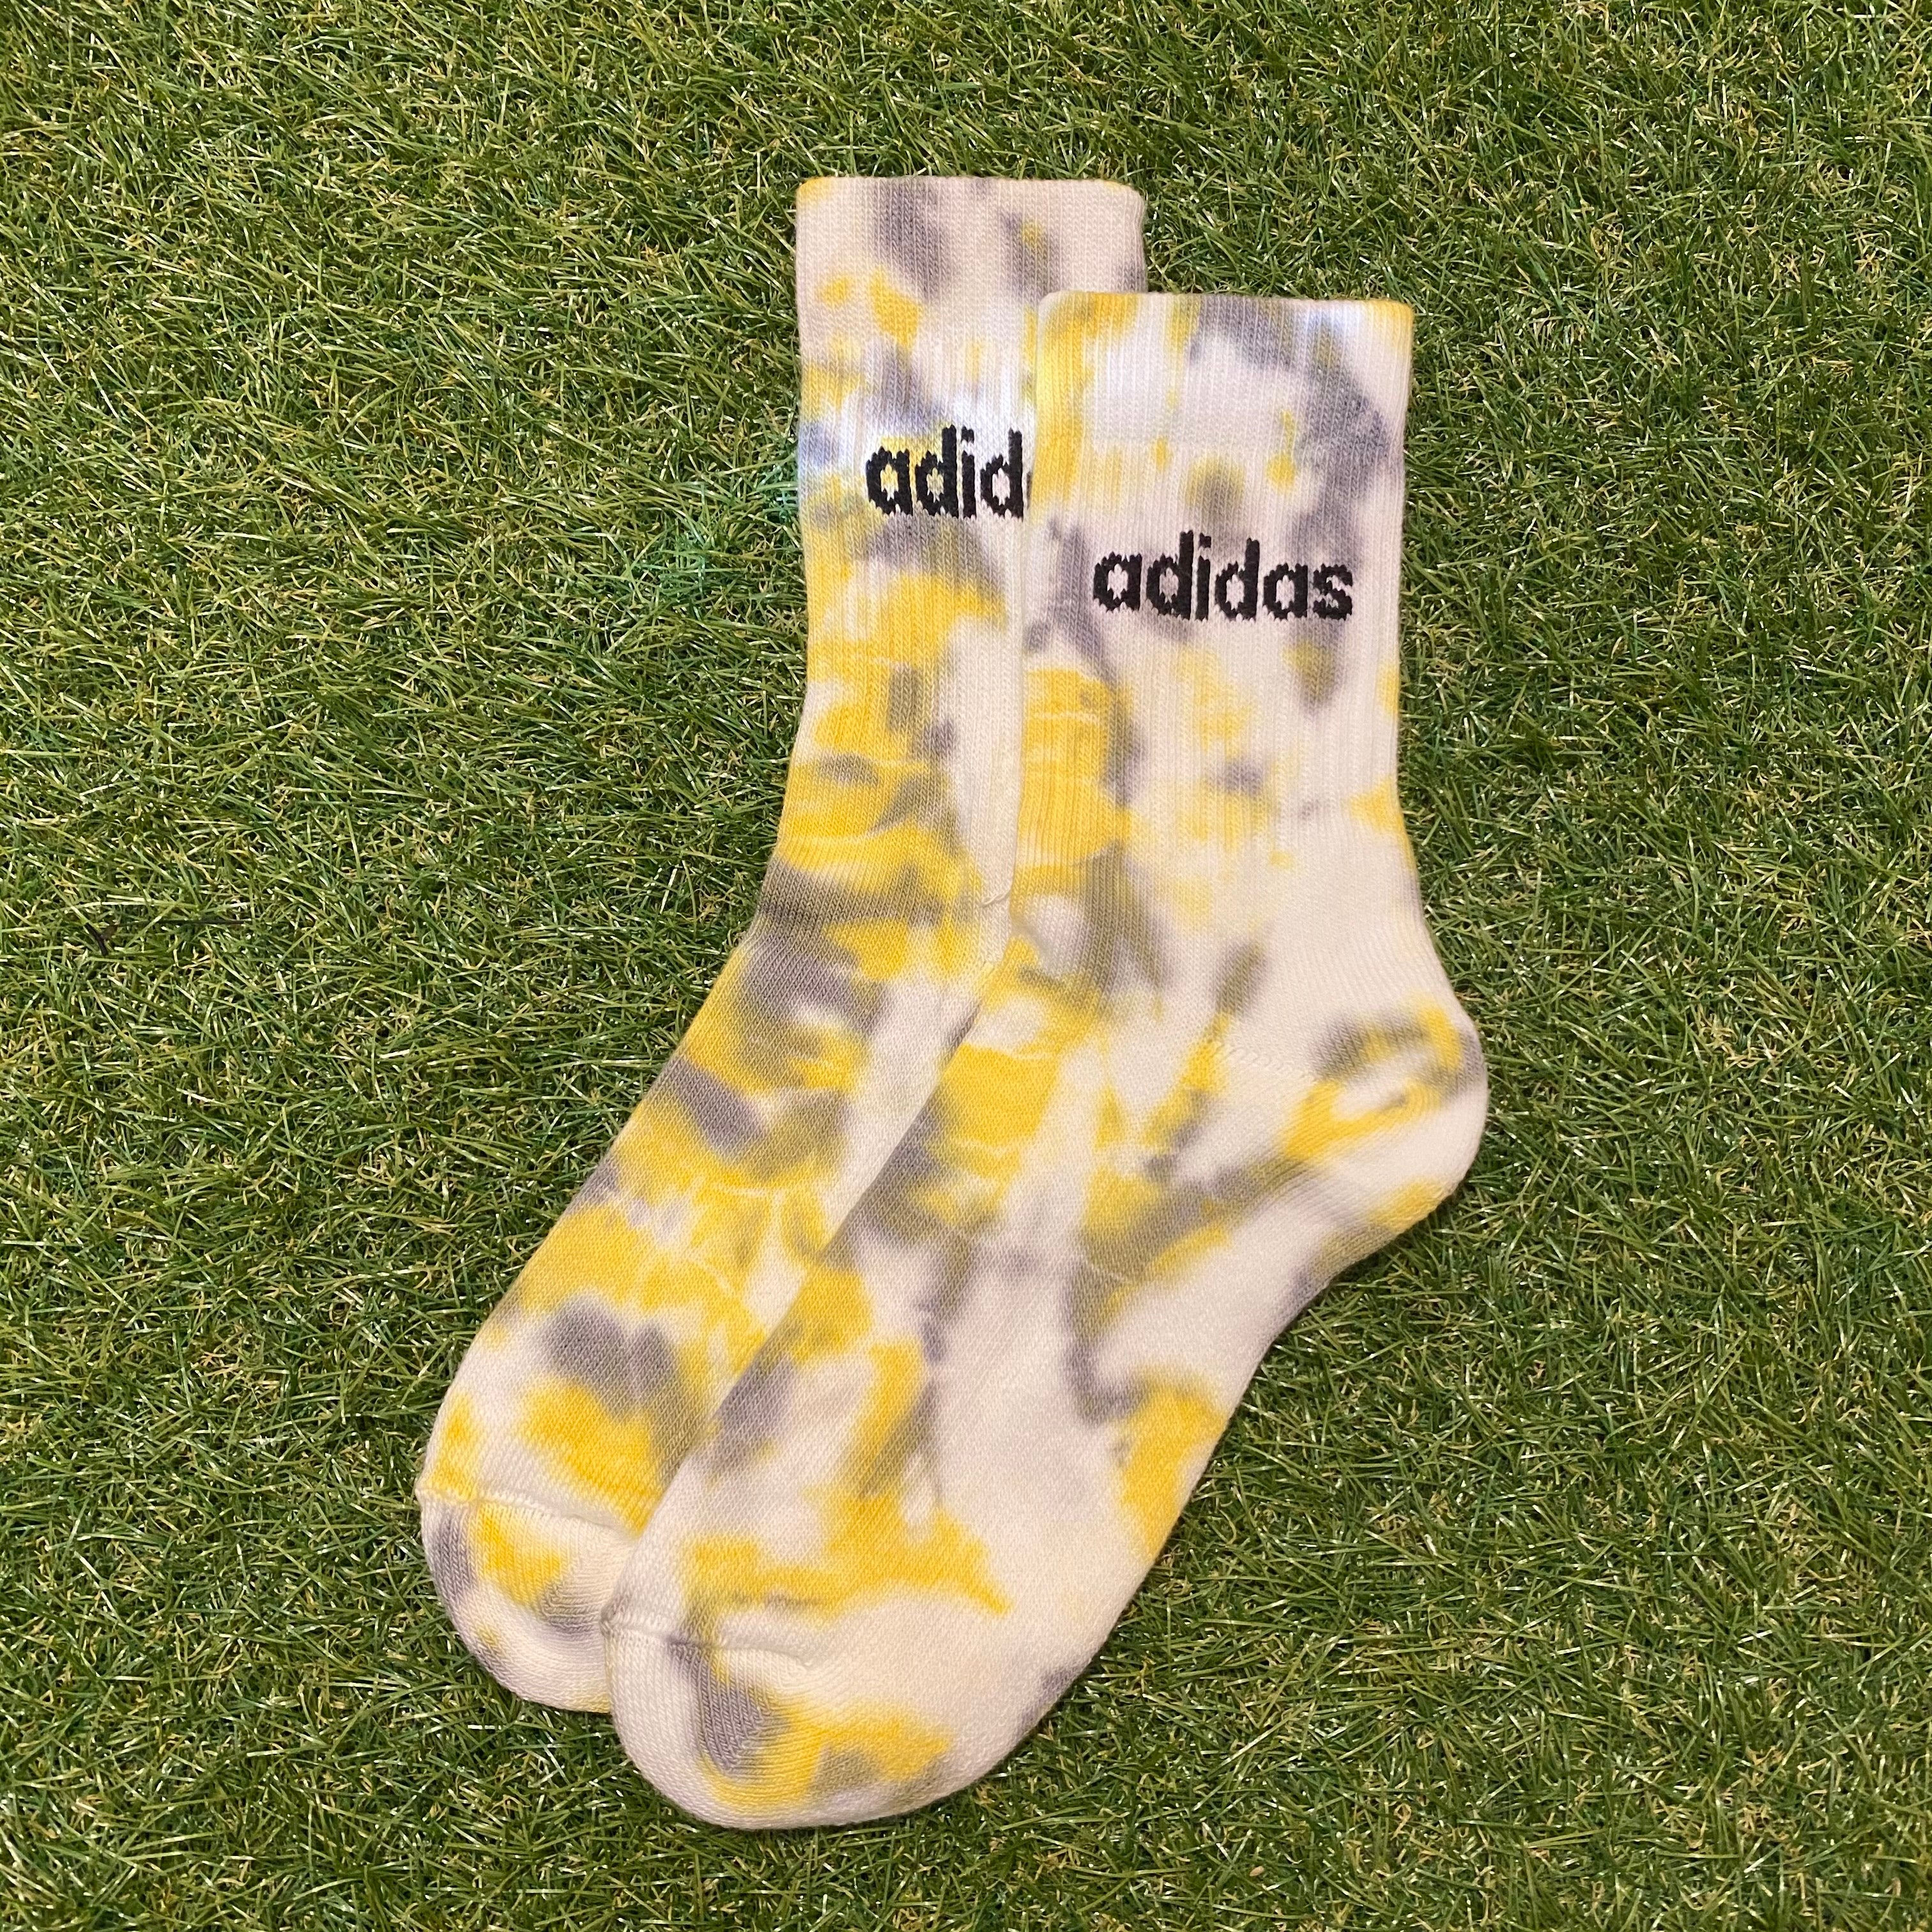 Adidas ‘Yellow & Grey’ Socks